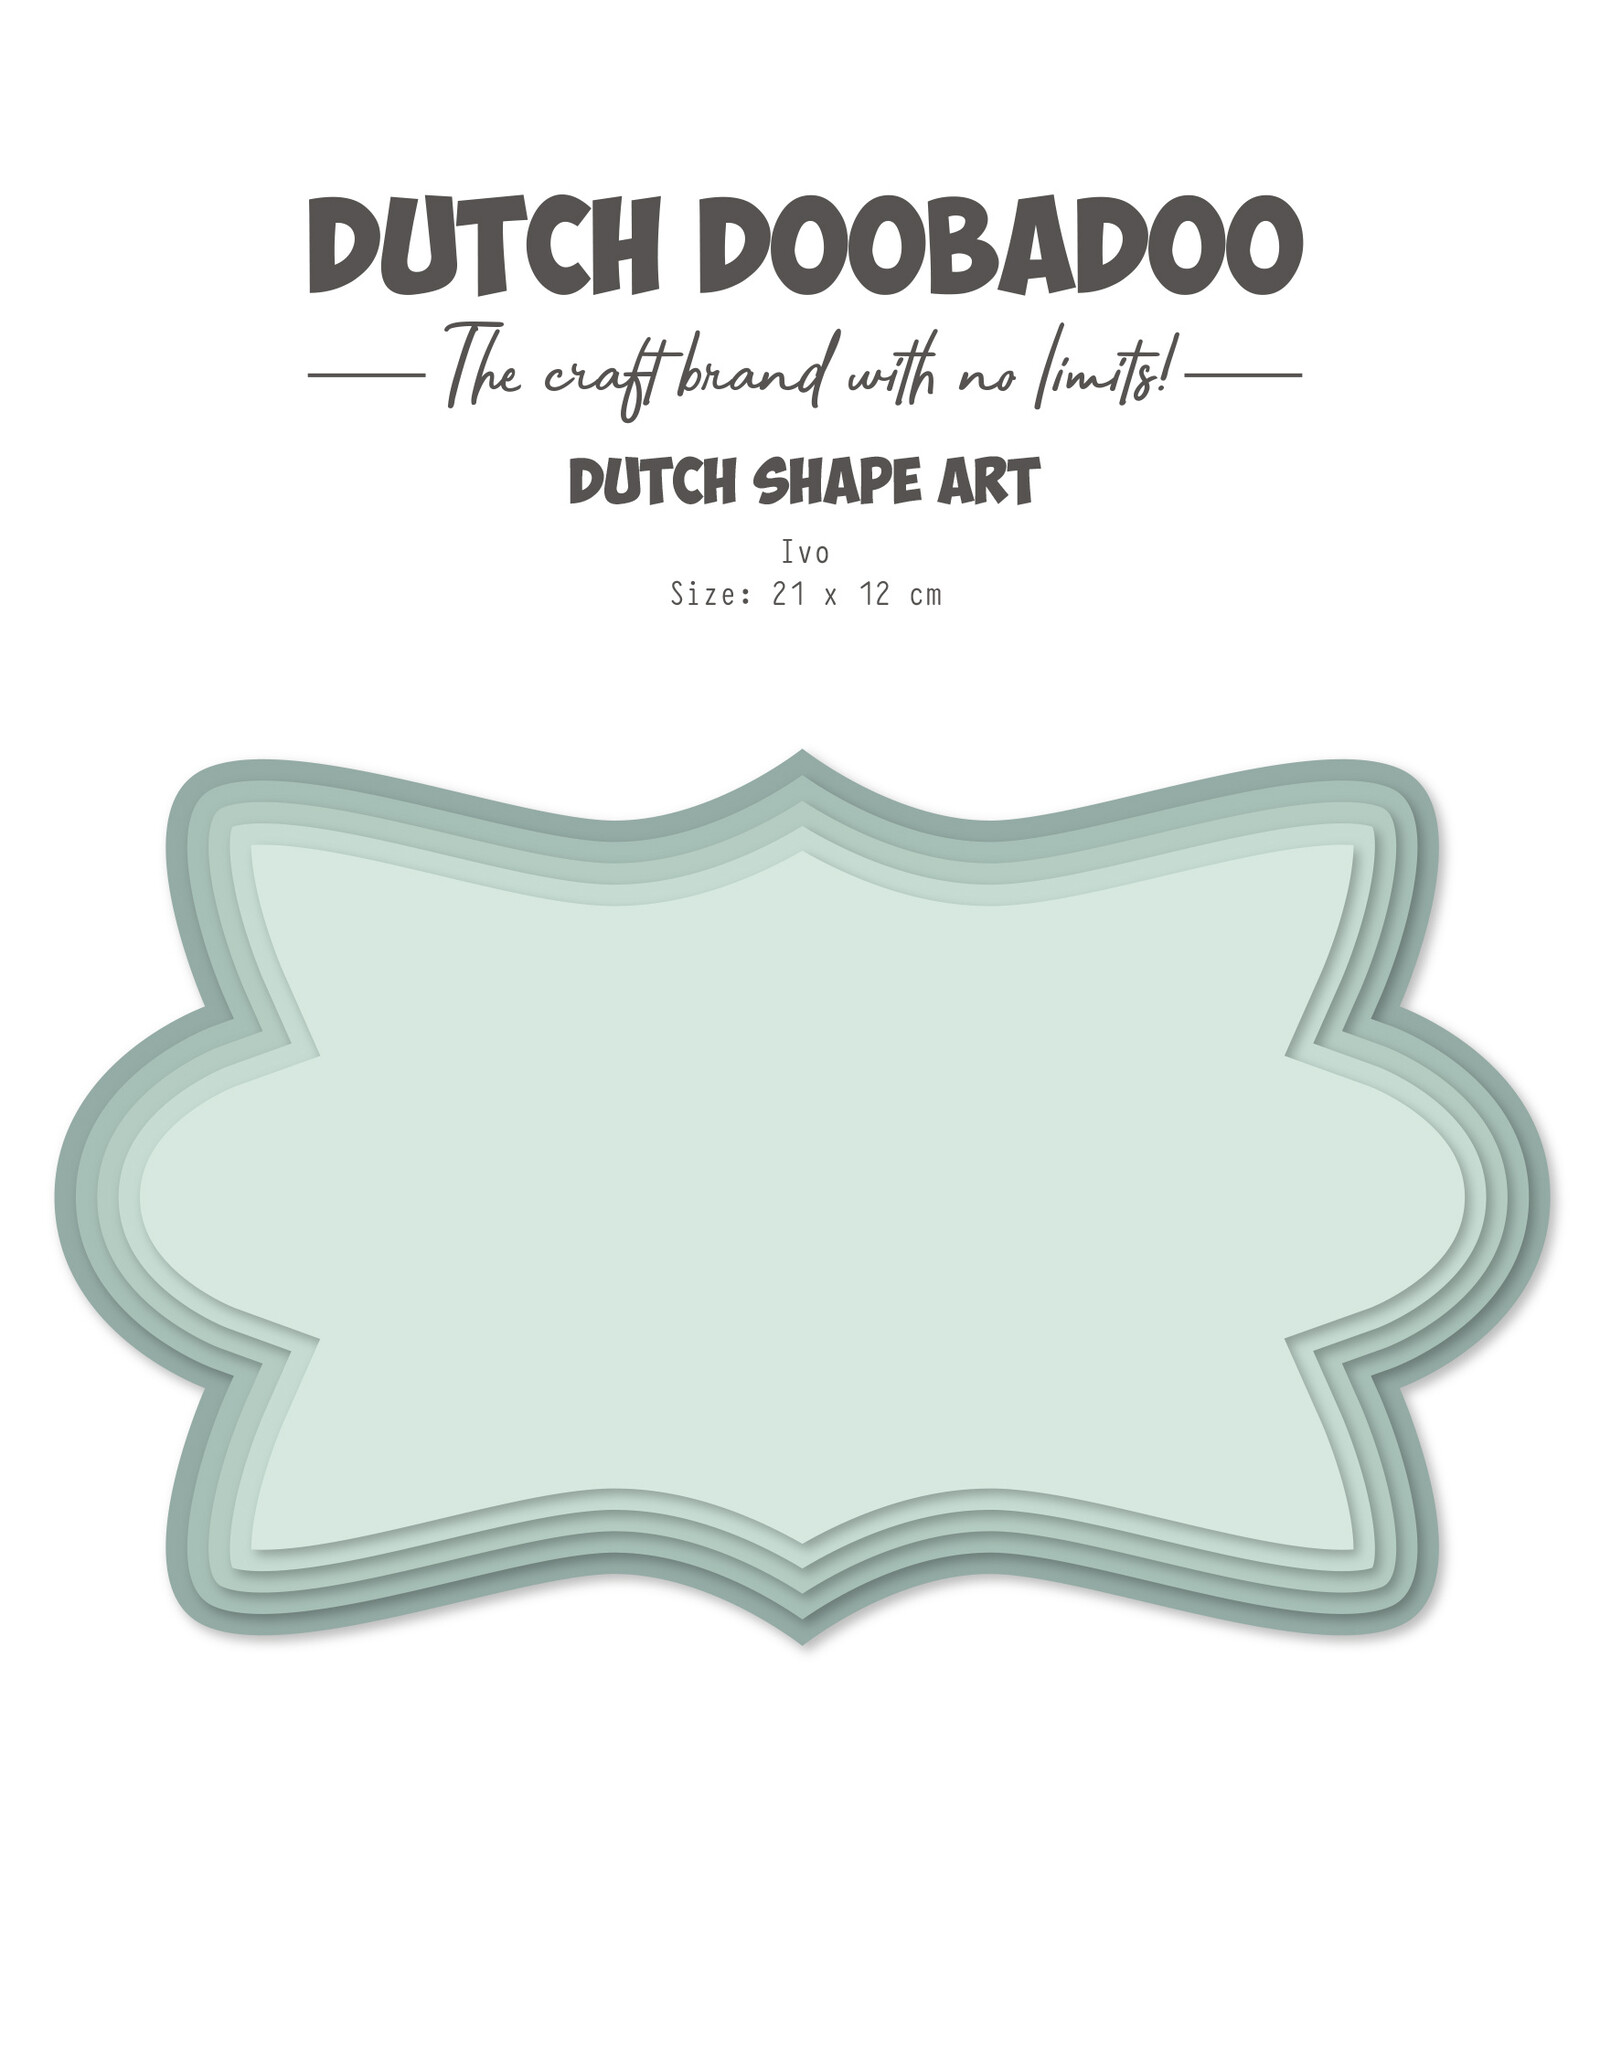 Dutch Doobadoo DDBD Shape-Art Ivo A5